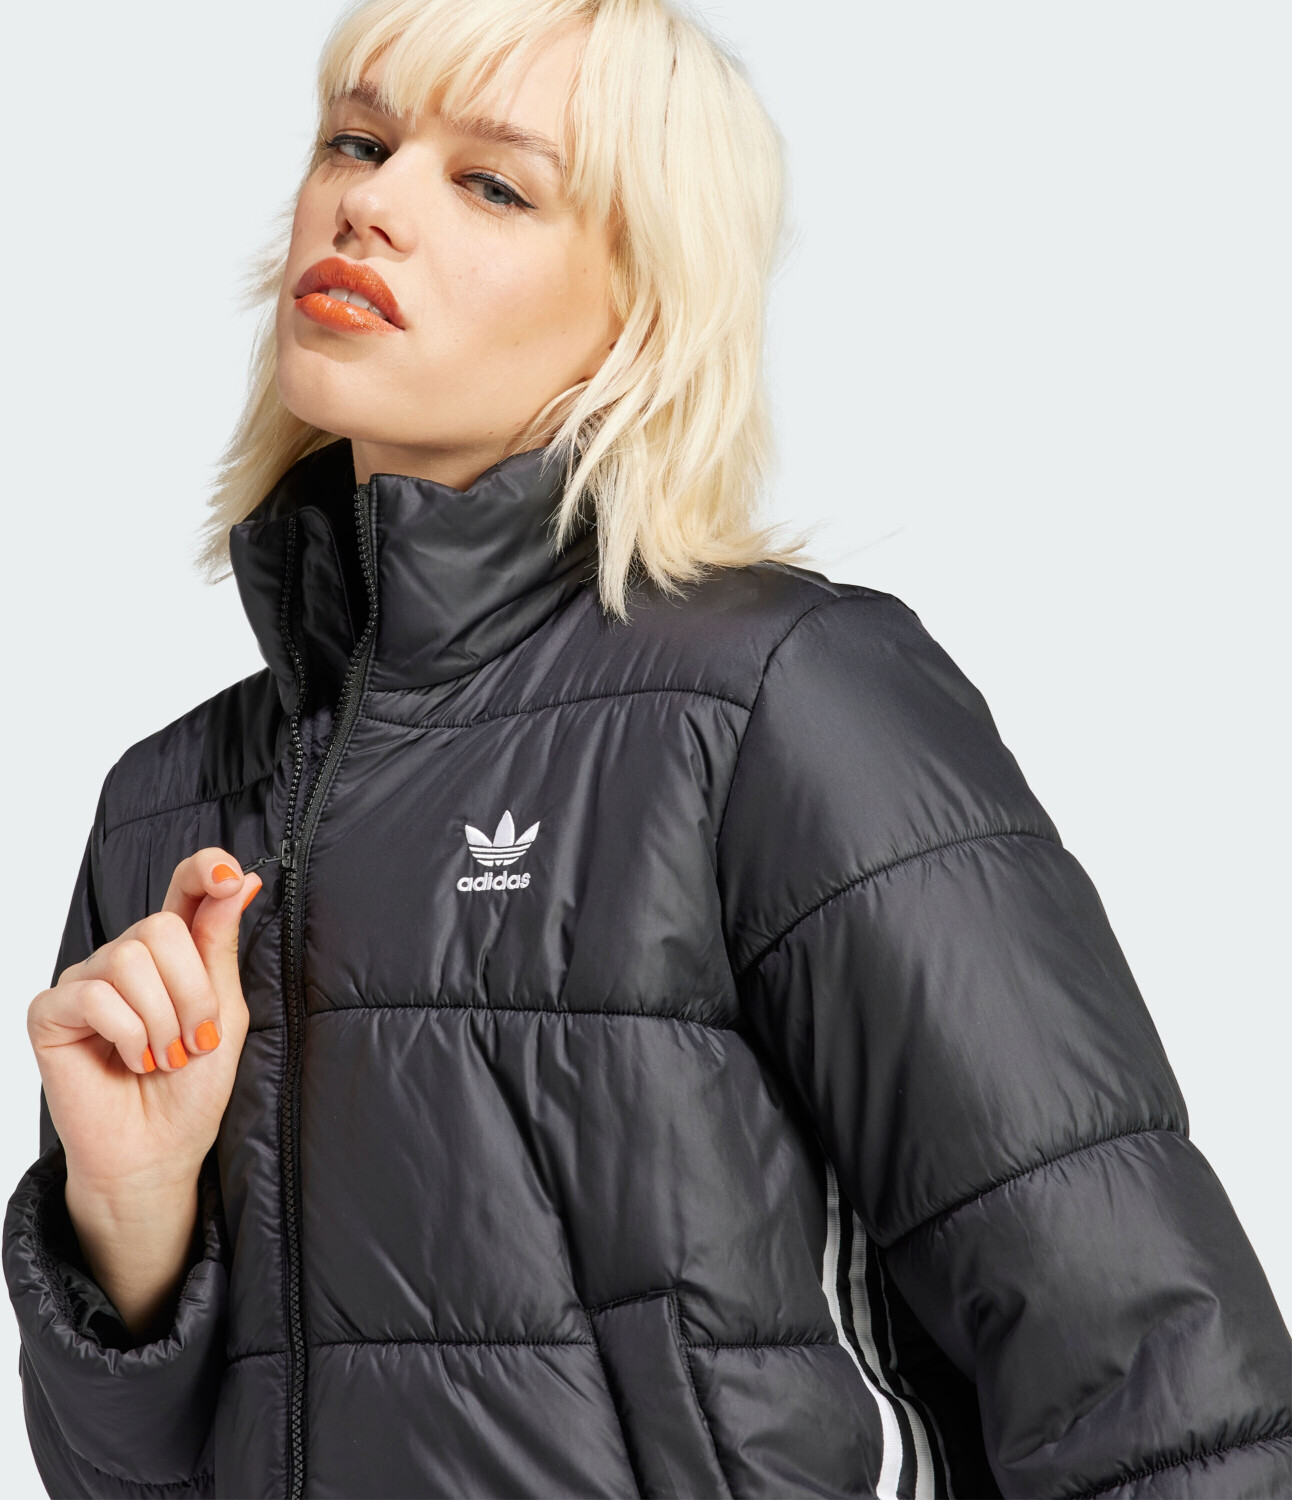 Adicolor black (II8455) Preisvergleich Jacket 50,00 Woman | Adidas € bei Puffer ab